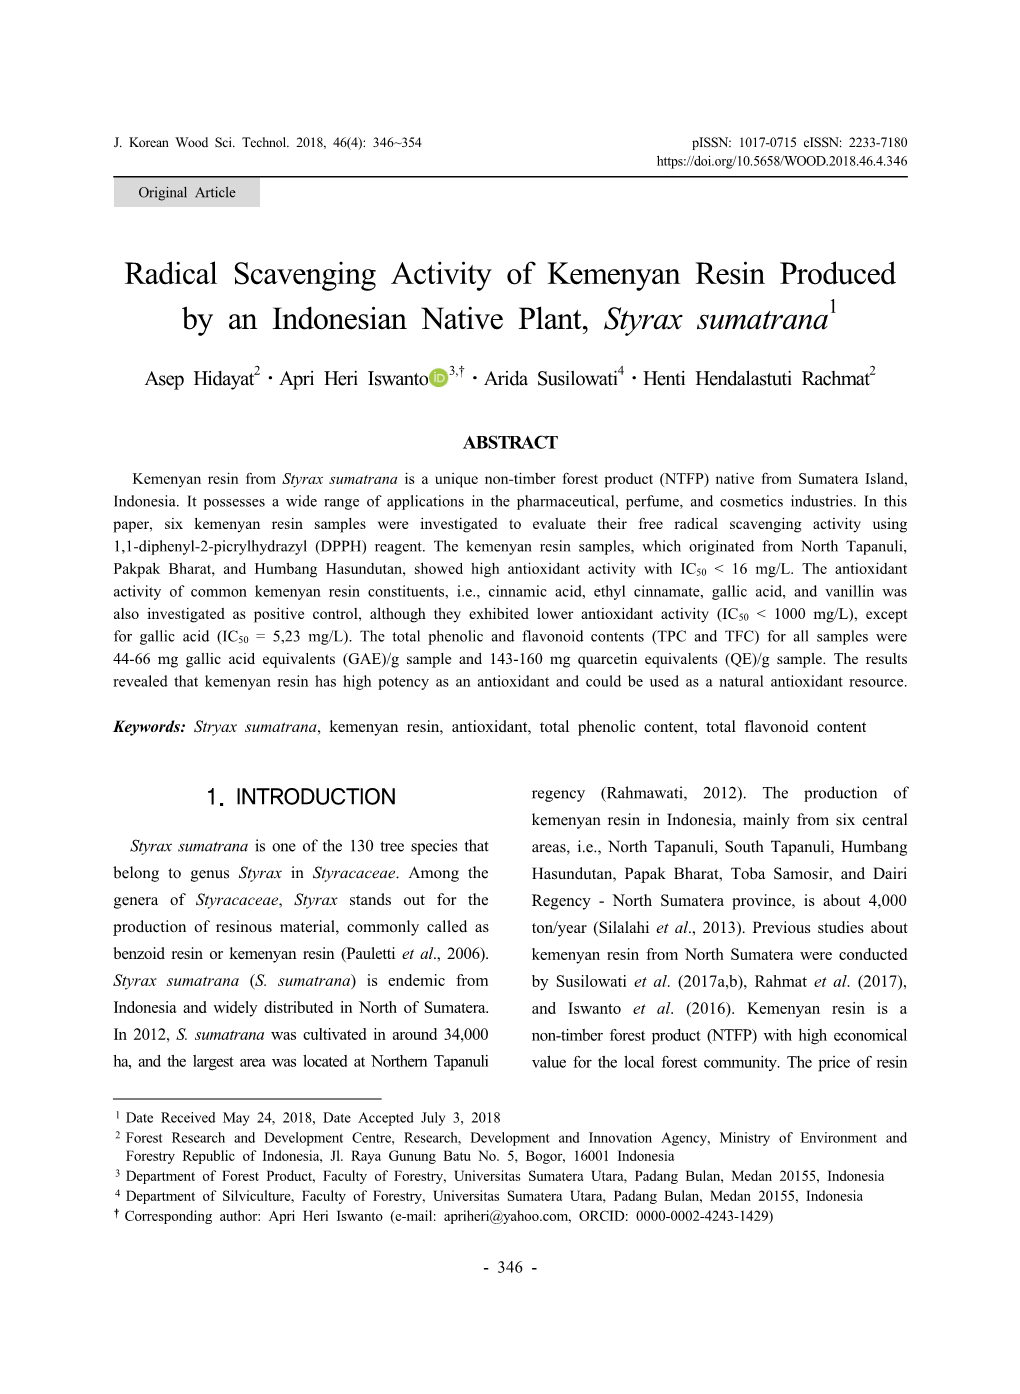 Radical Scavenging Activity of Kemenyan Resin Produced by an Indonesian Native Plant, Styrax Sumatrana1